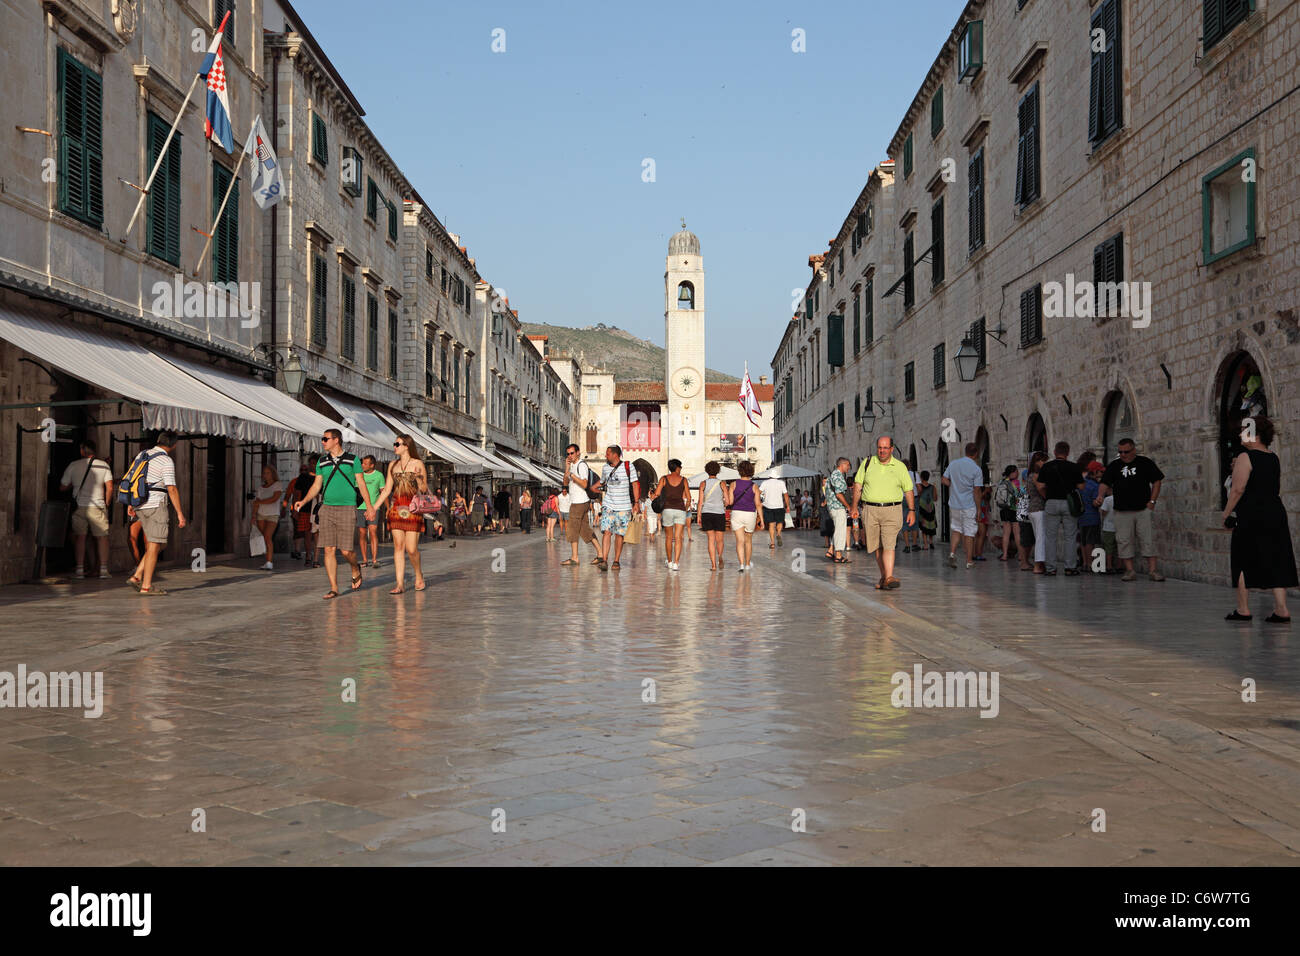 Stradun - main street in the old town of Dubrovnik Stock Photo